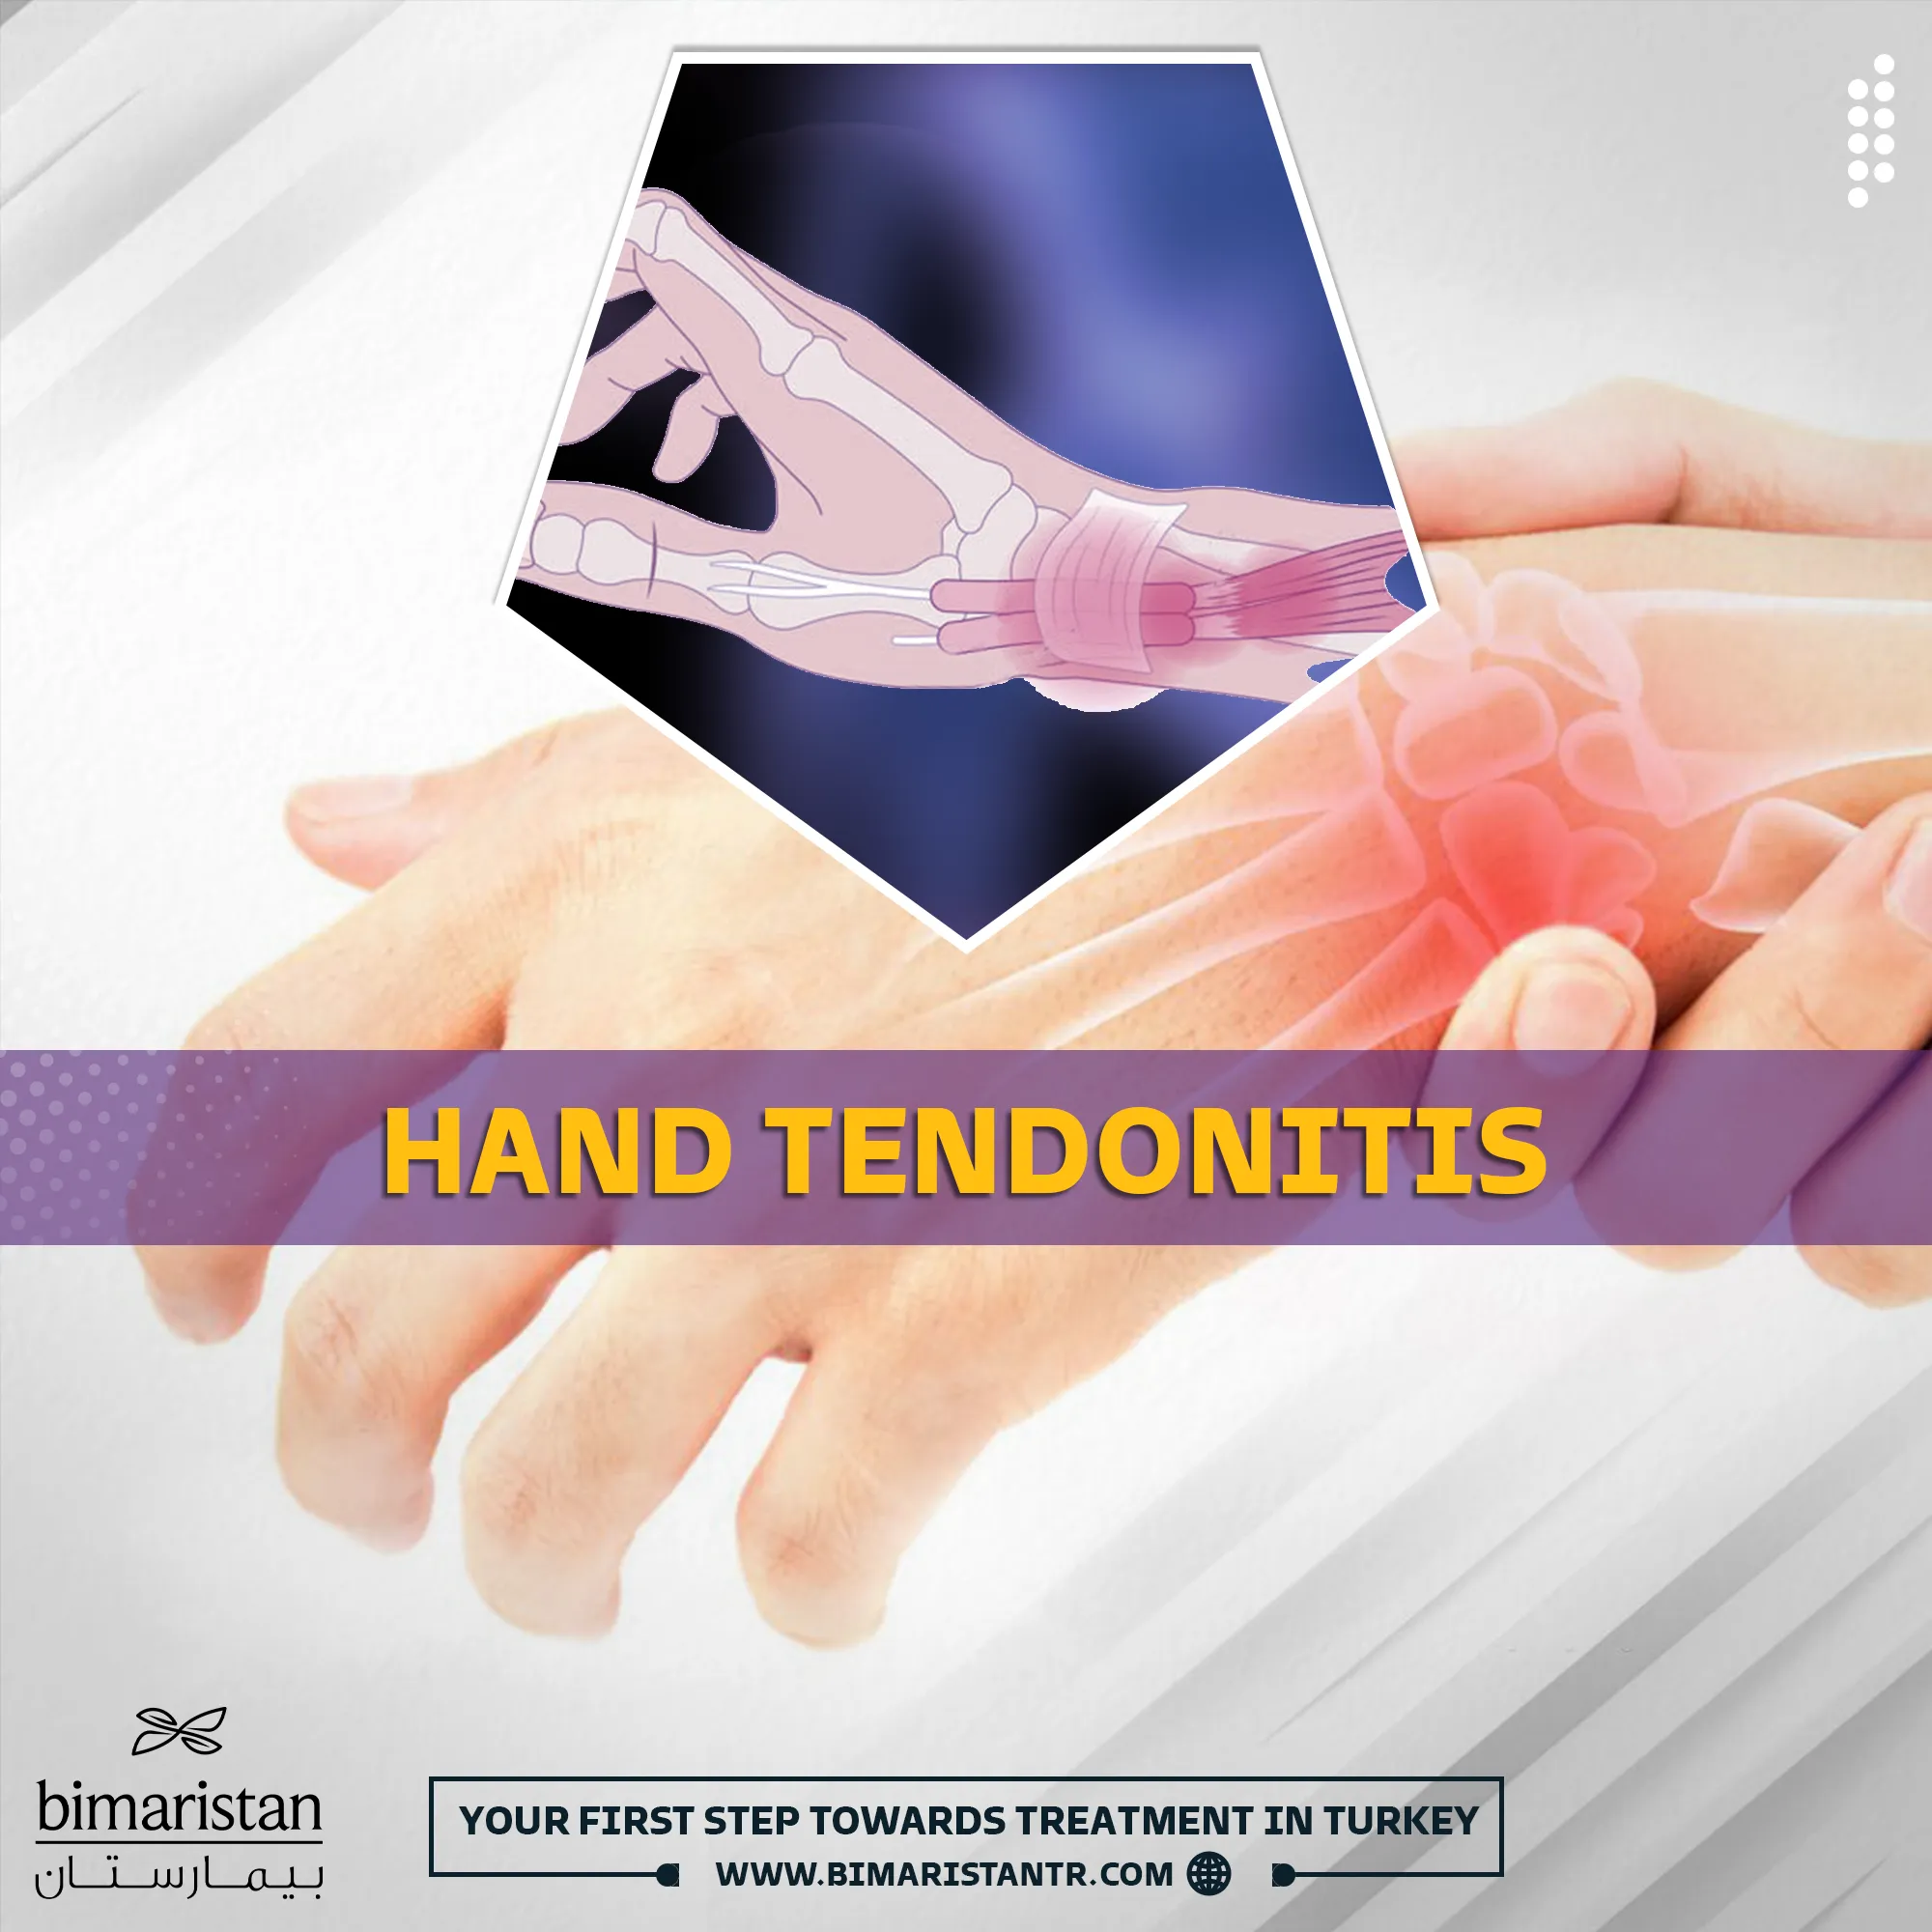 Hand tendonitis